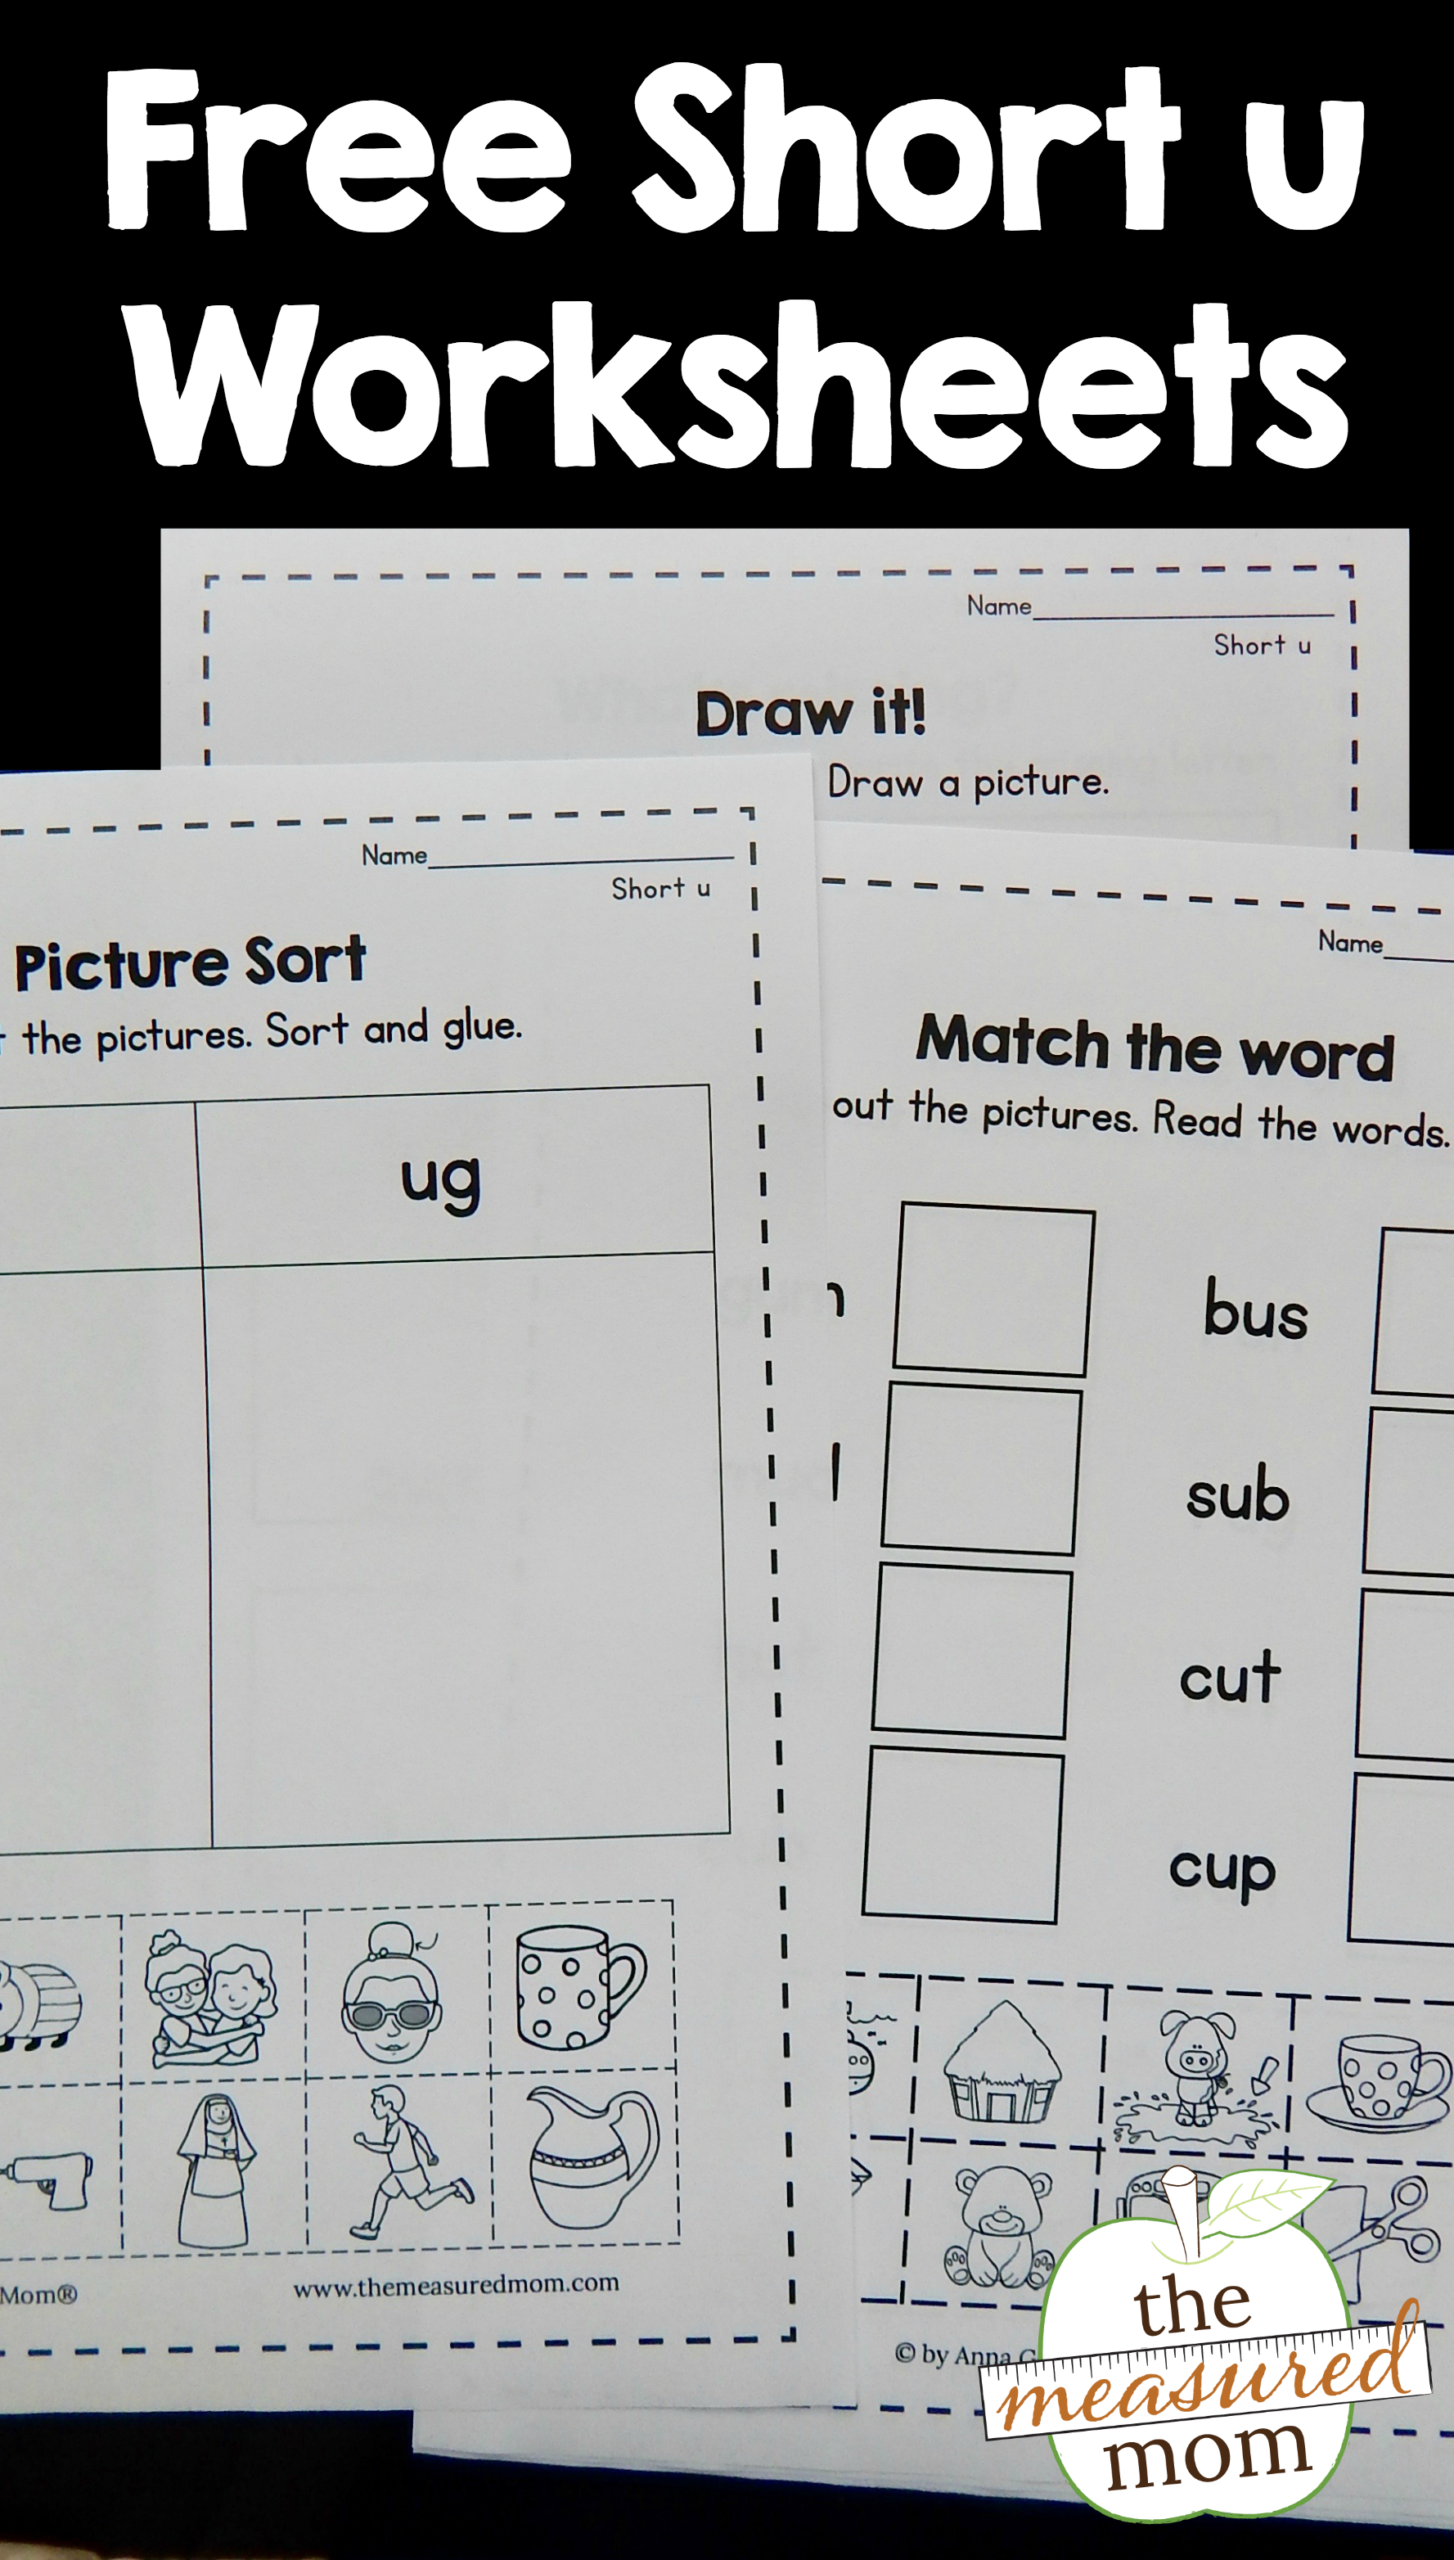 Free Short U Worksheets - The Measured Mom with regard to Letter U Worksheets For First Grade